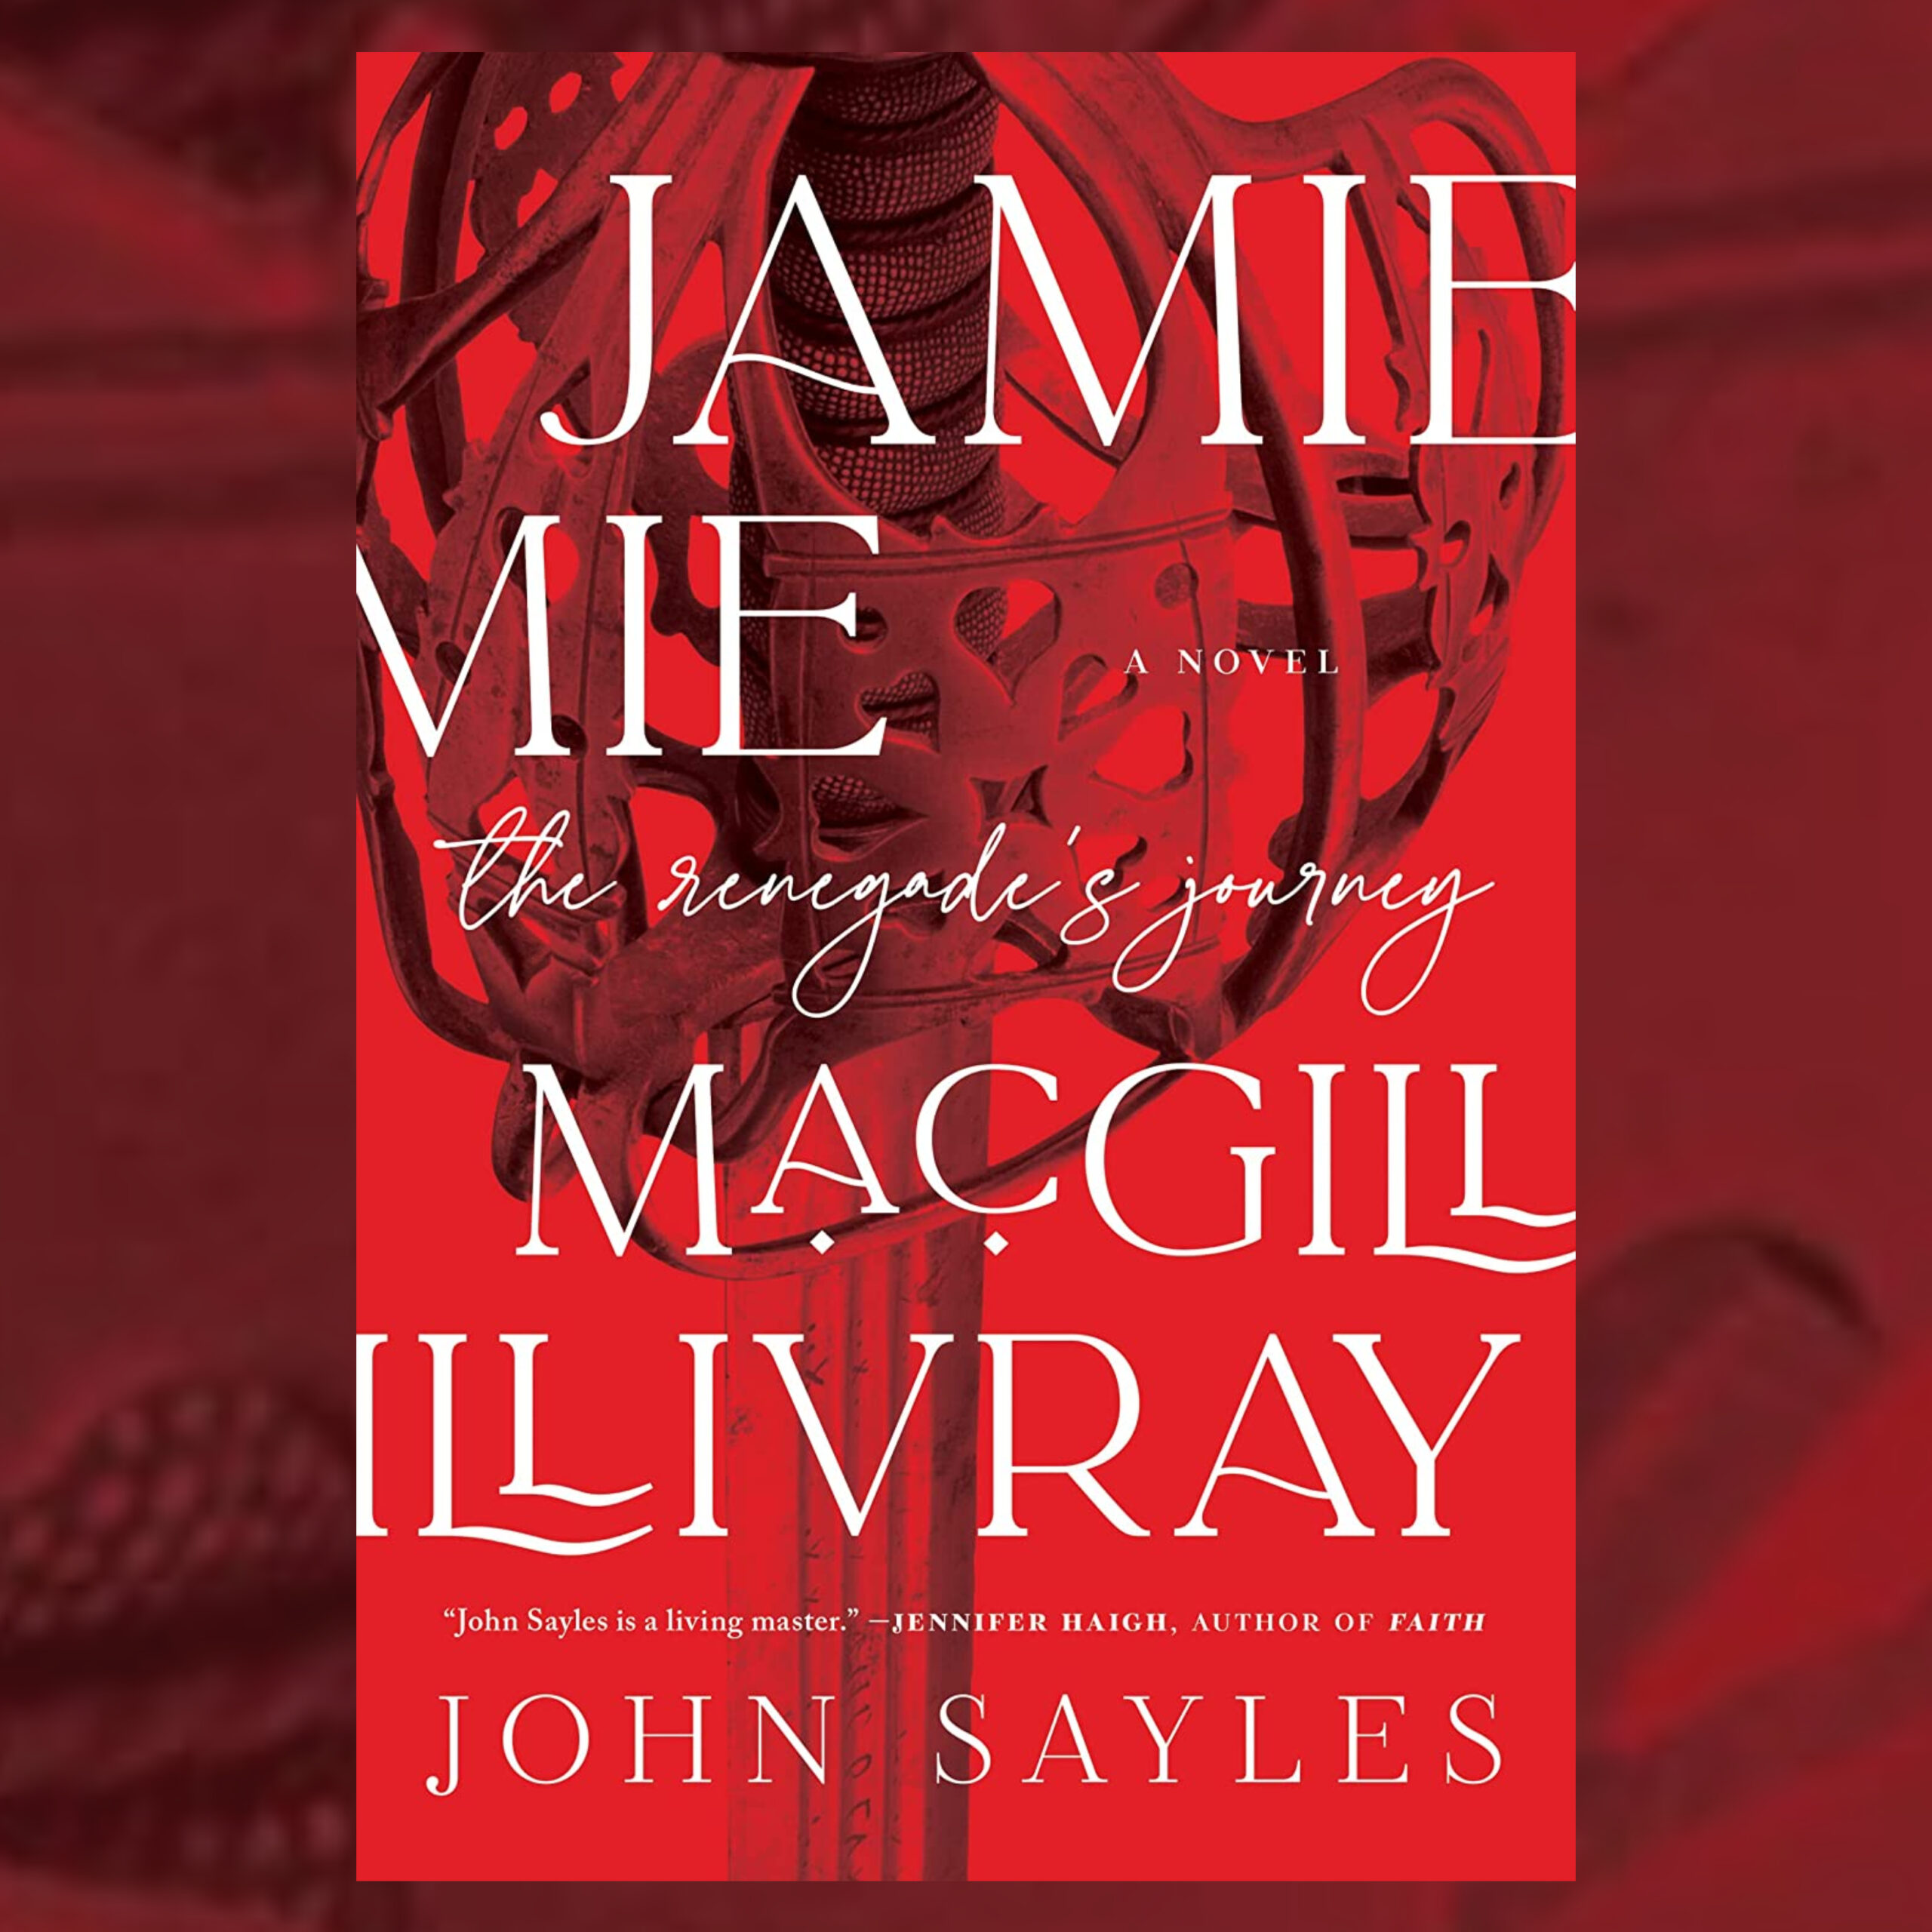 1812 - John Sayles - Jamie MacGillivray: The Renegade’s Journey | The Book Show